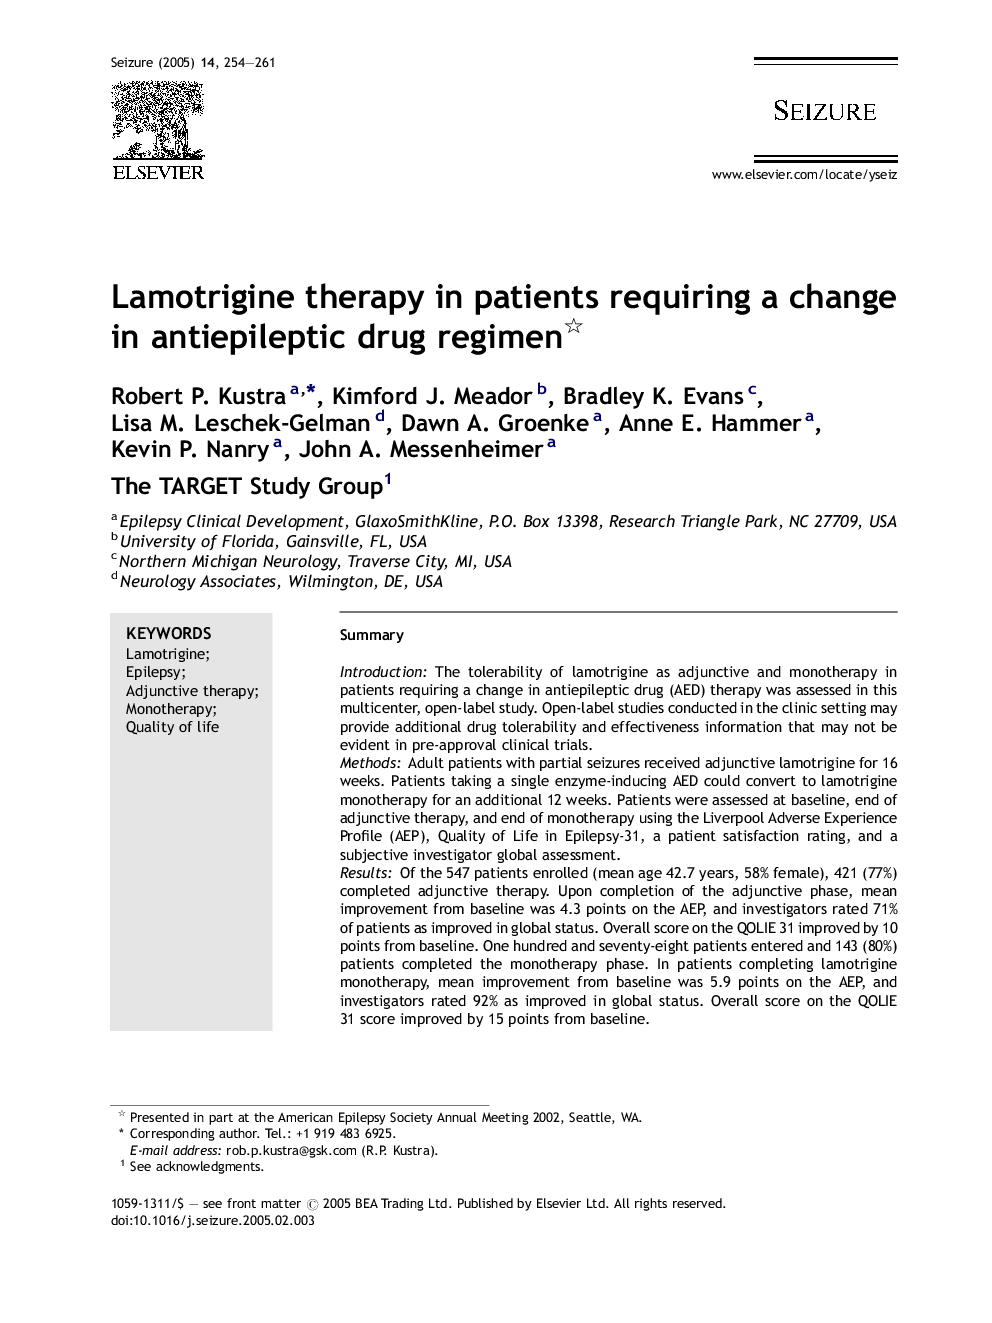 Lamotrigine therapy in patients requiring a change in antiepileptic drug regimen